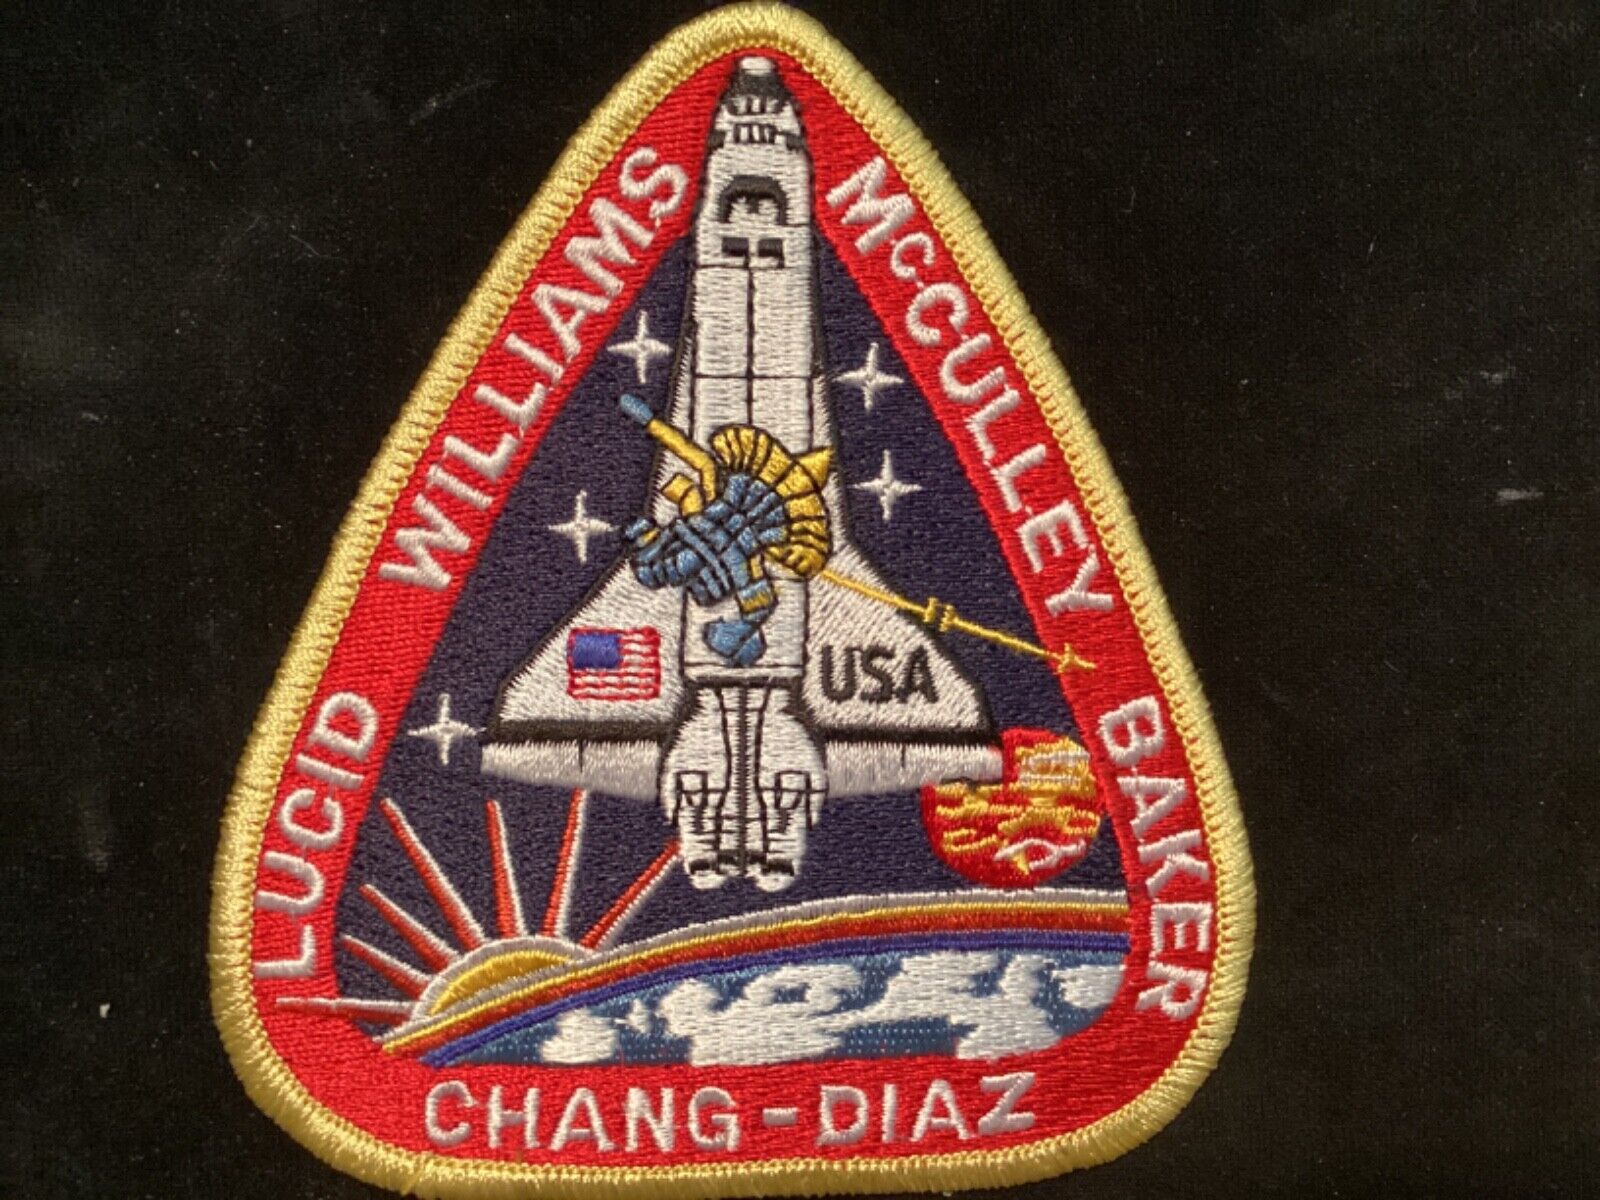 STS-34 ATLANTIS SPACE SHUTTLE PATCH MINT CONDITION